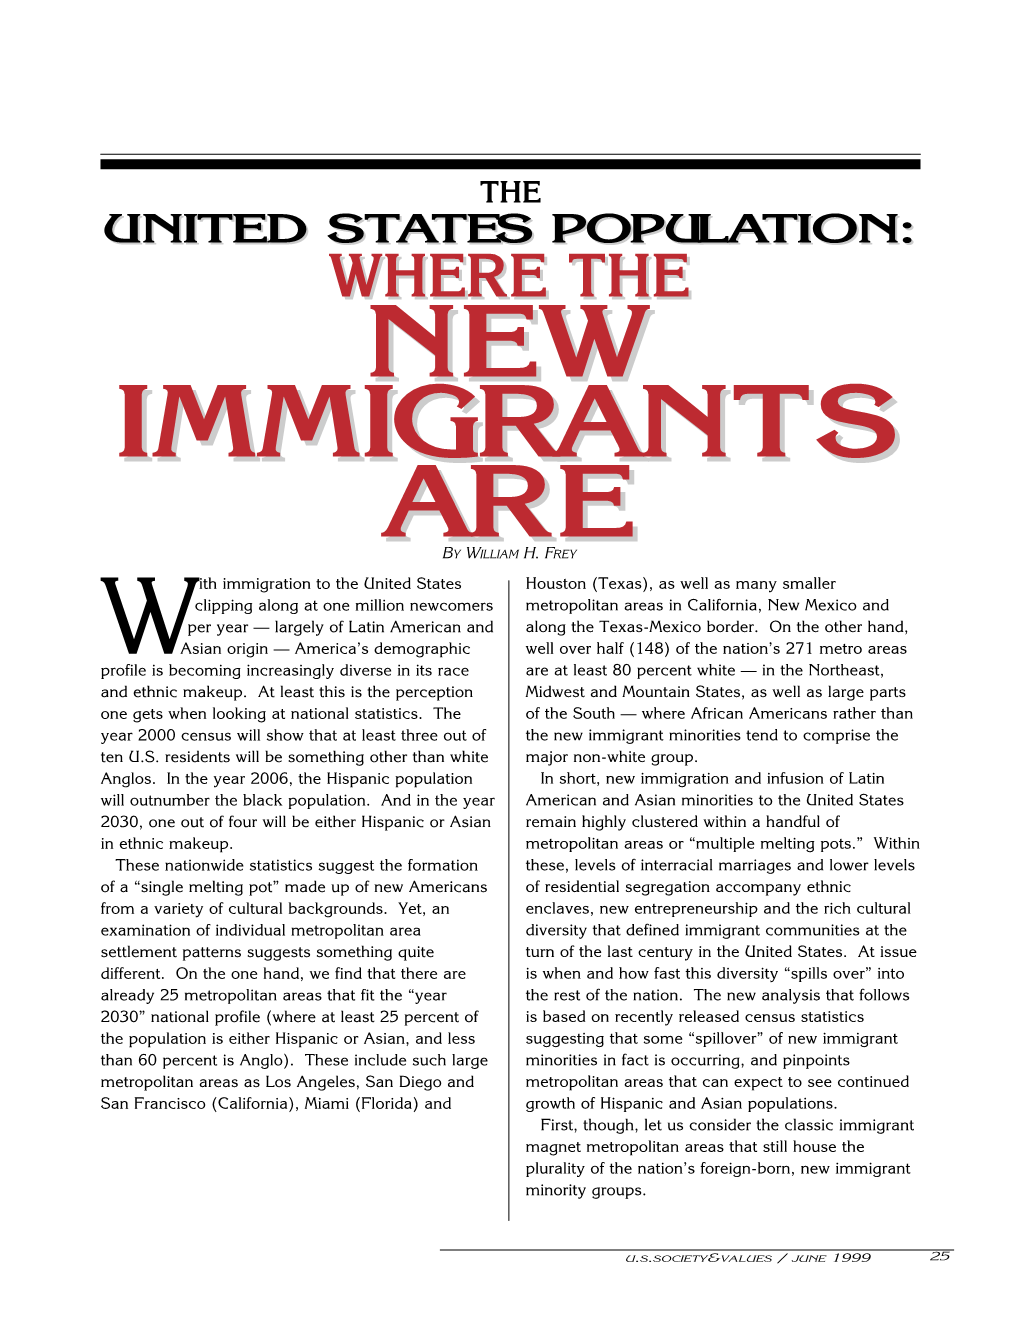 New Immigrants